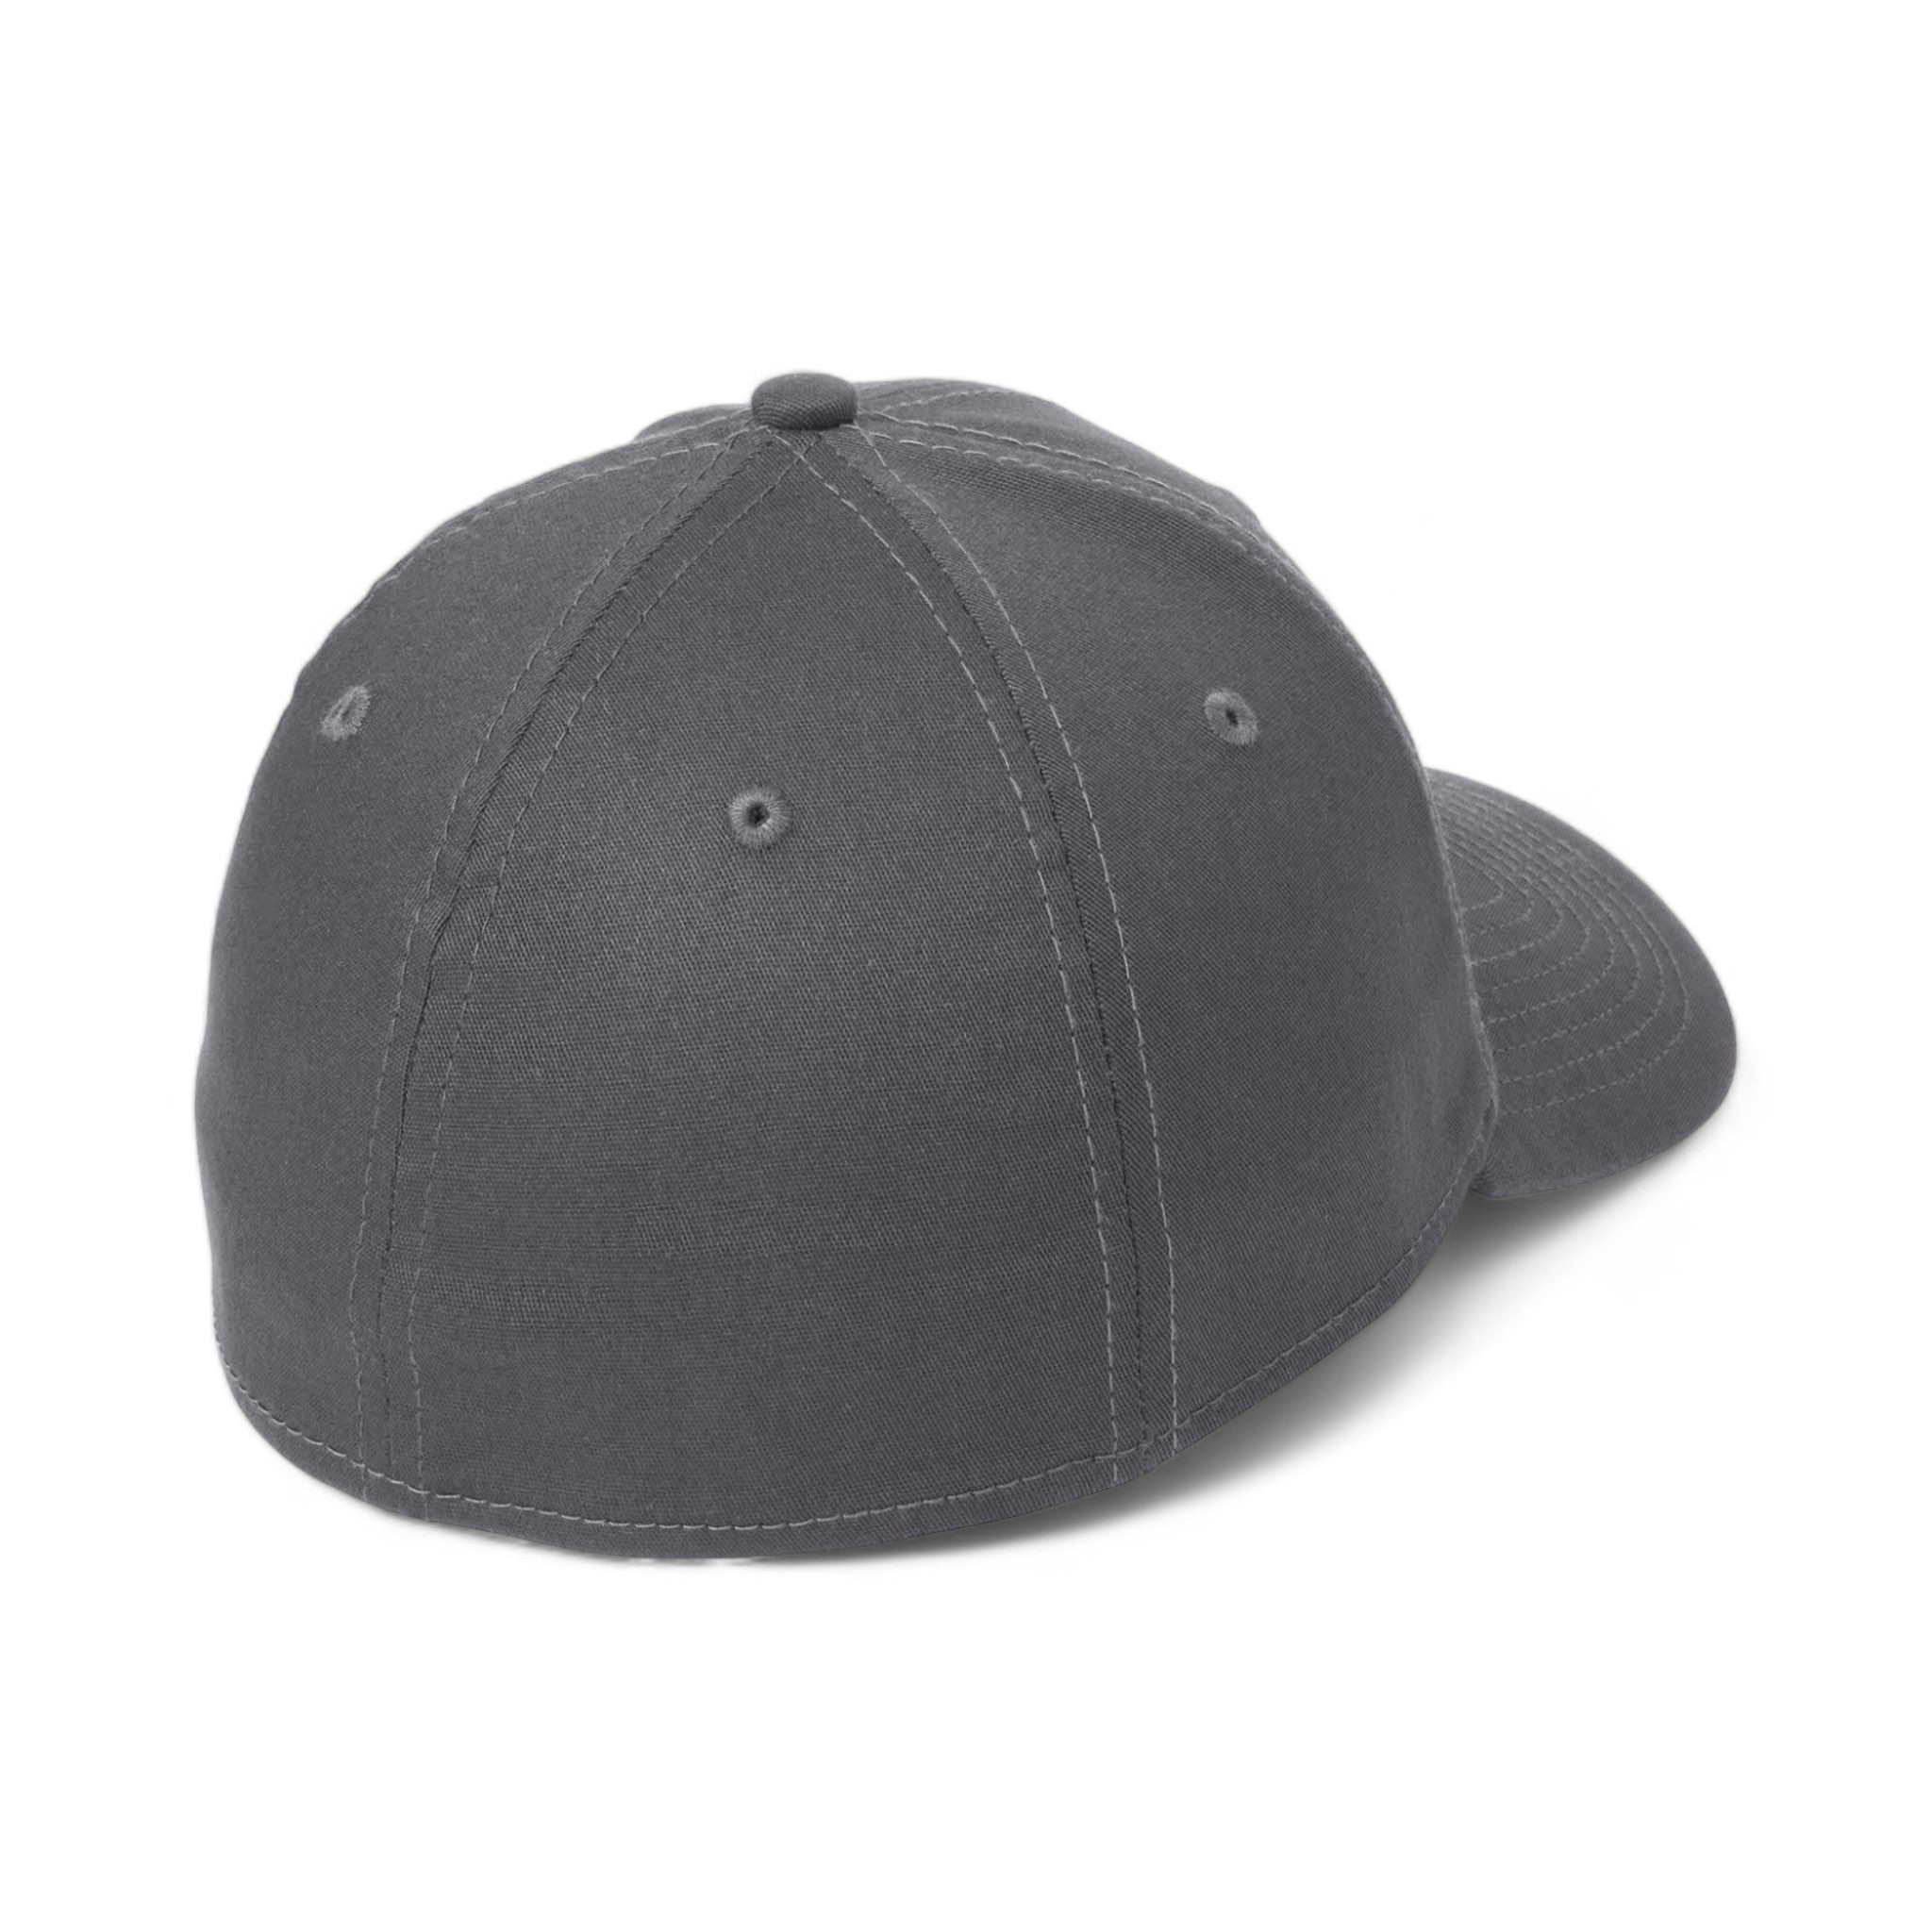 Back view of New Era NE1000 custom hat in graphite